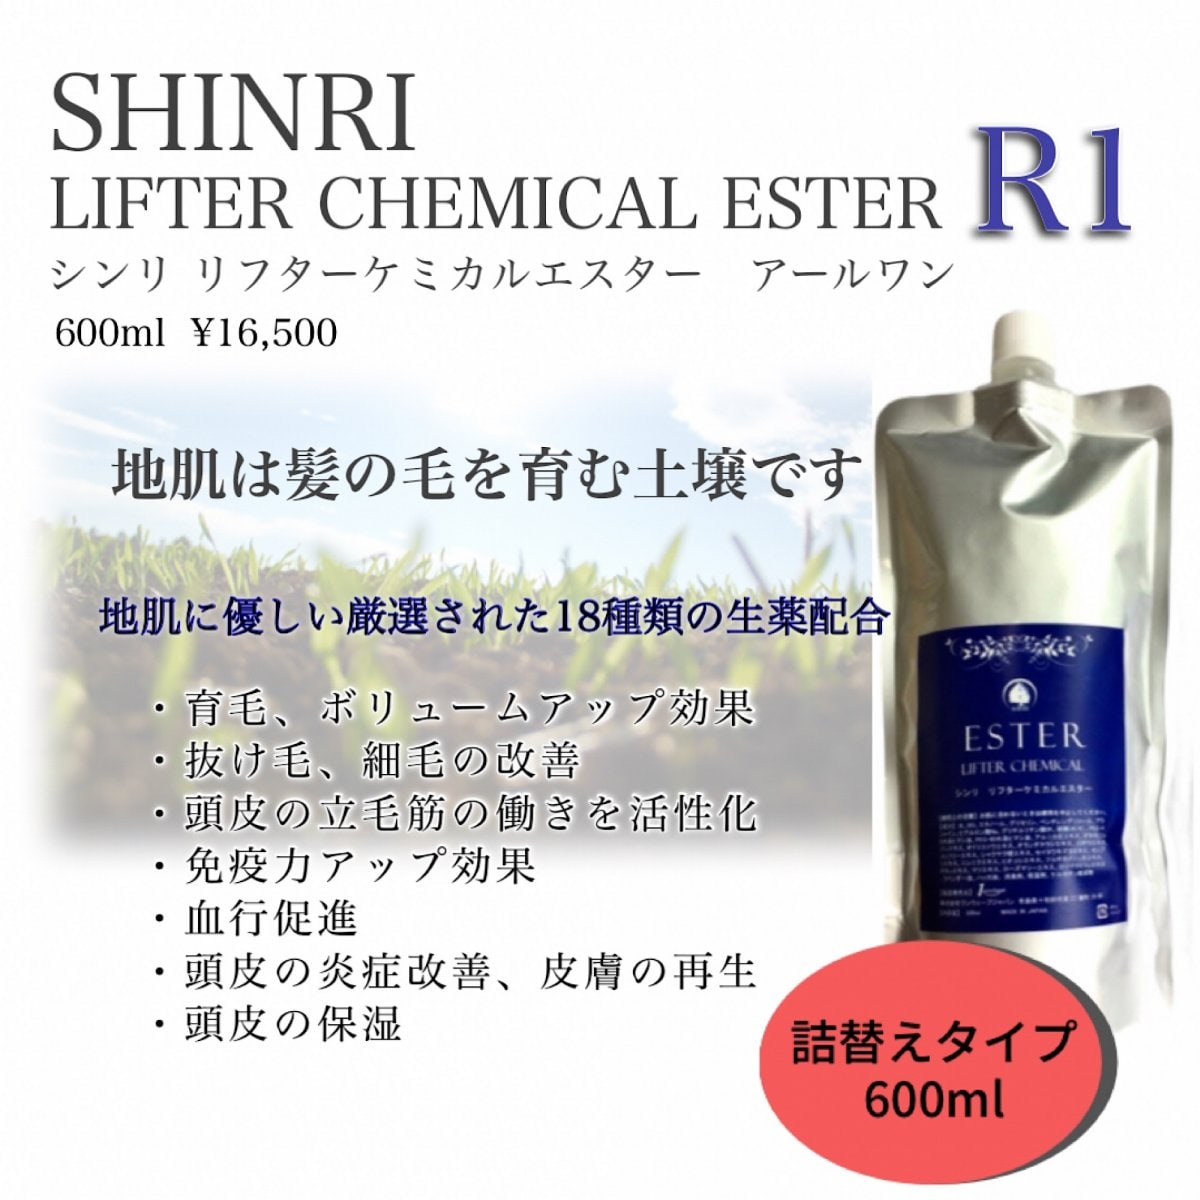 600ml 詰替【シンリ|育毛剤】SHINRI リフターケミカルエスター R1